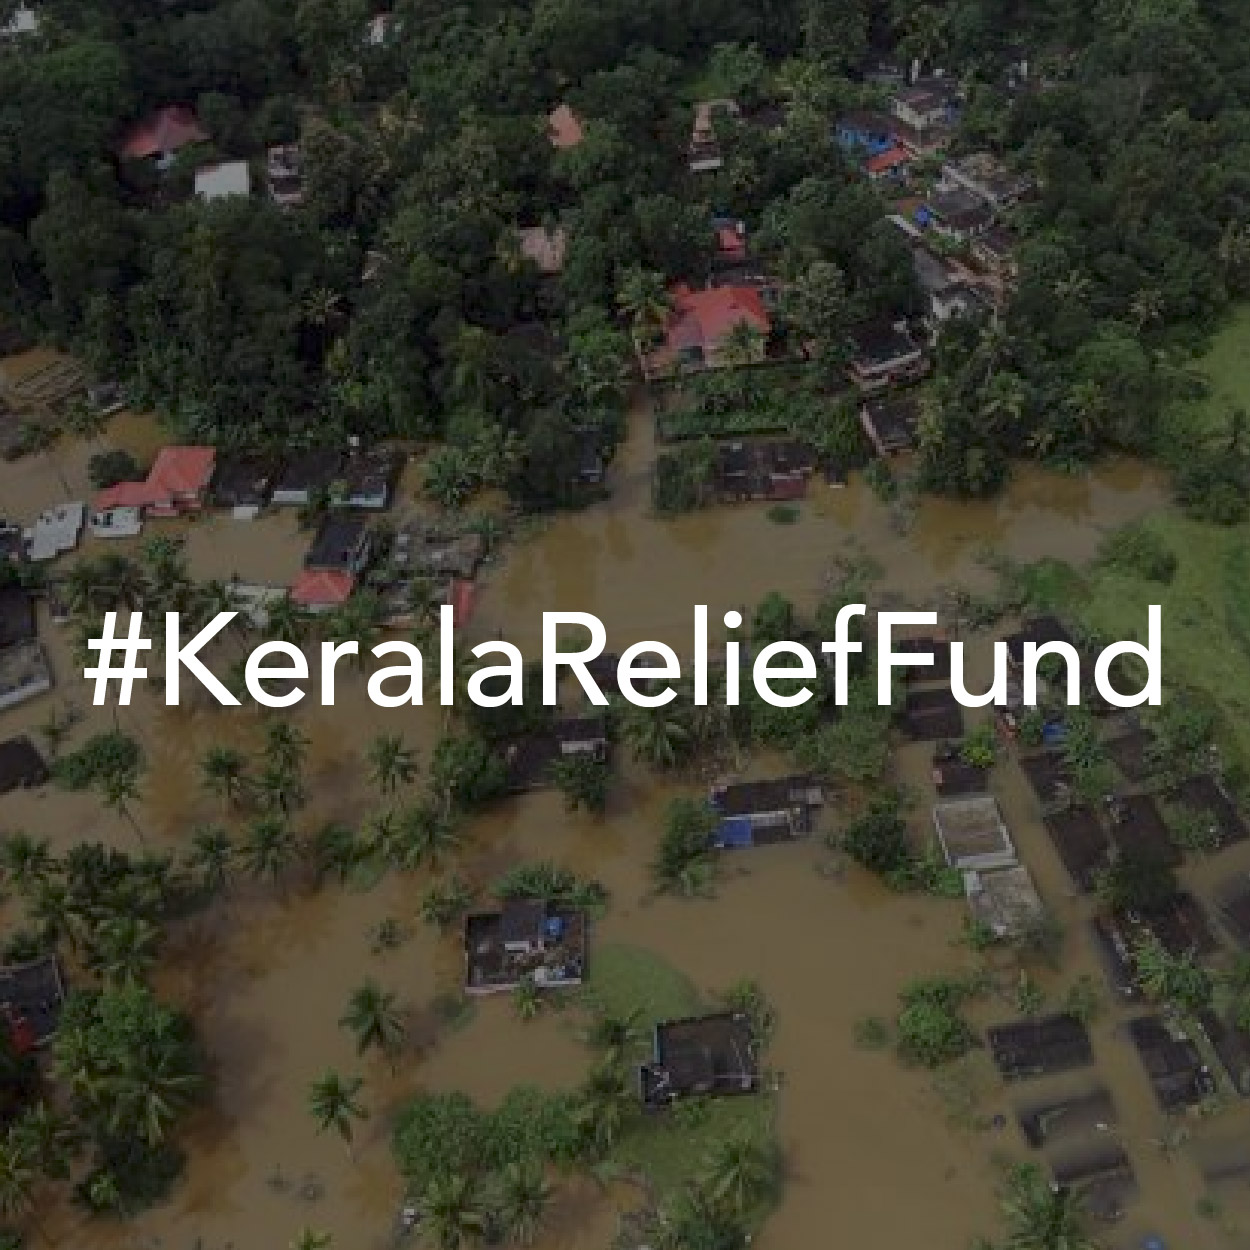 Kerala Relief Fund Voucher worth Rs 100